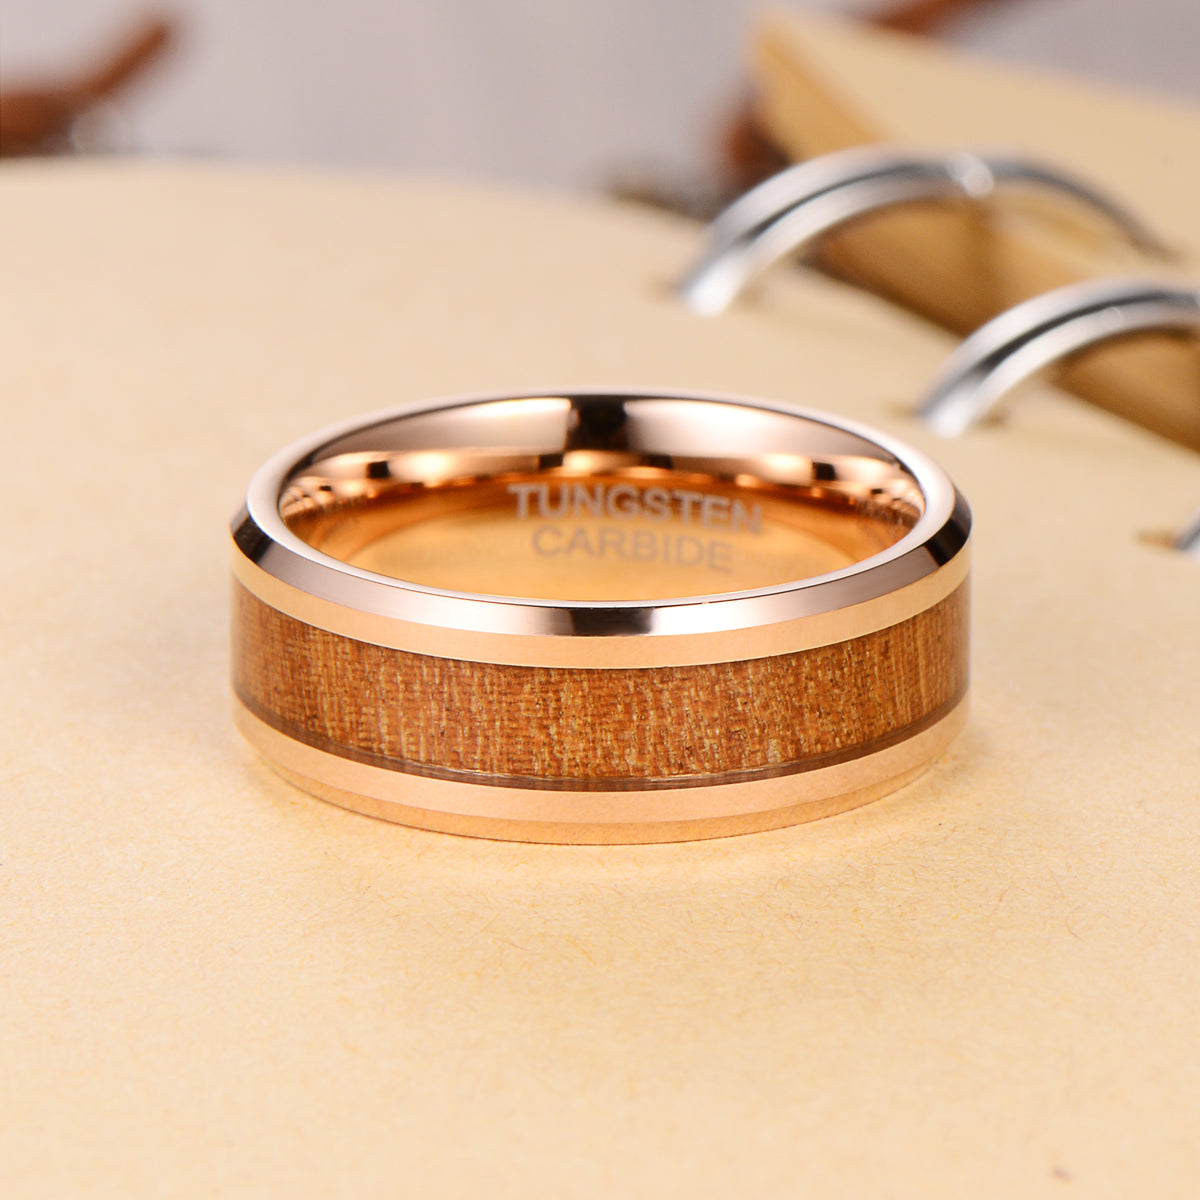 Men's Koa Wood Rosegold Tungsten Ring Men's Ring Ouyuan Jewelry 